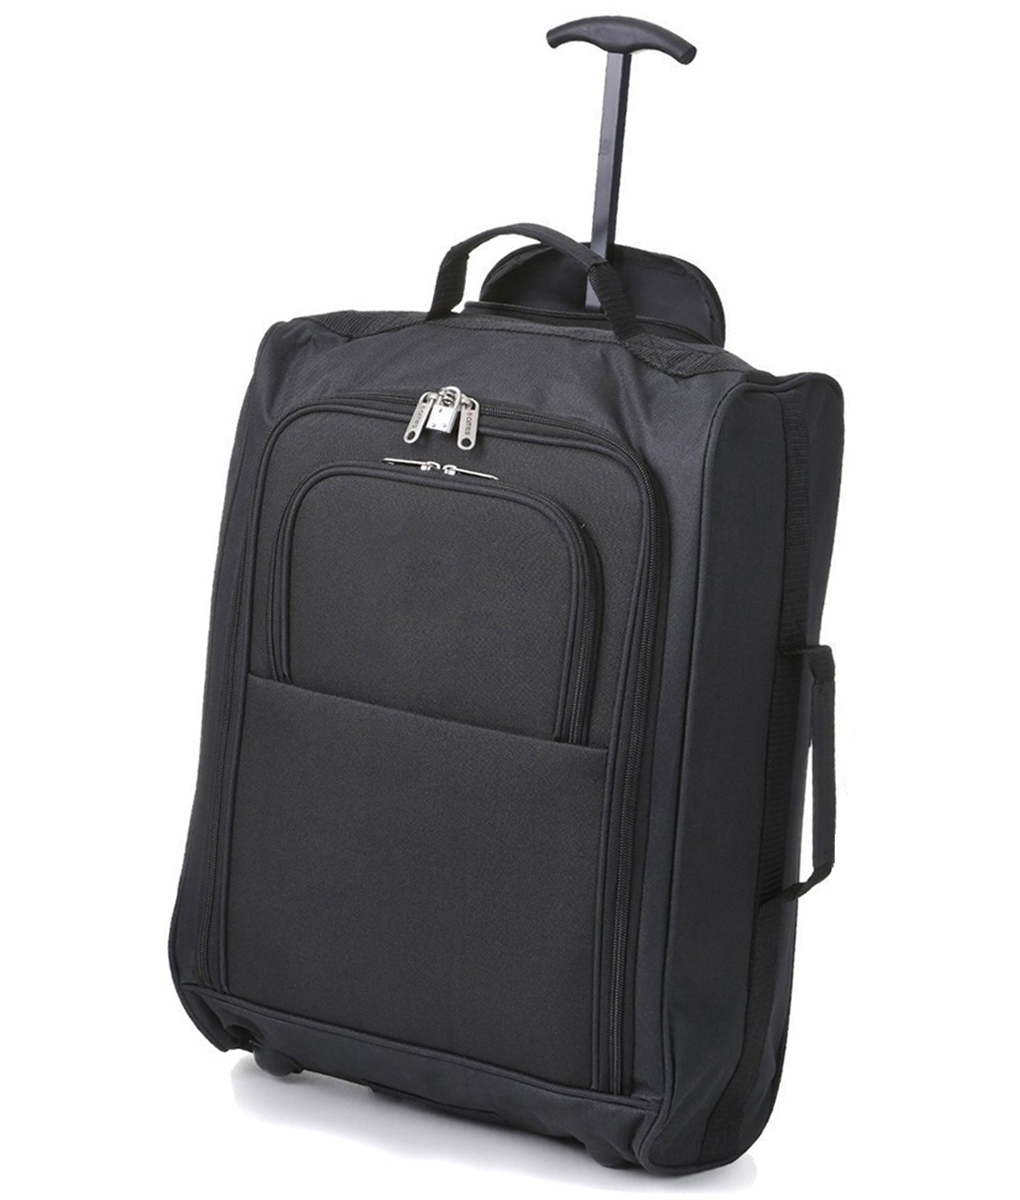 Trolley én backpack 55x35x20 (het slimste formaat) - Smartkoffers